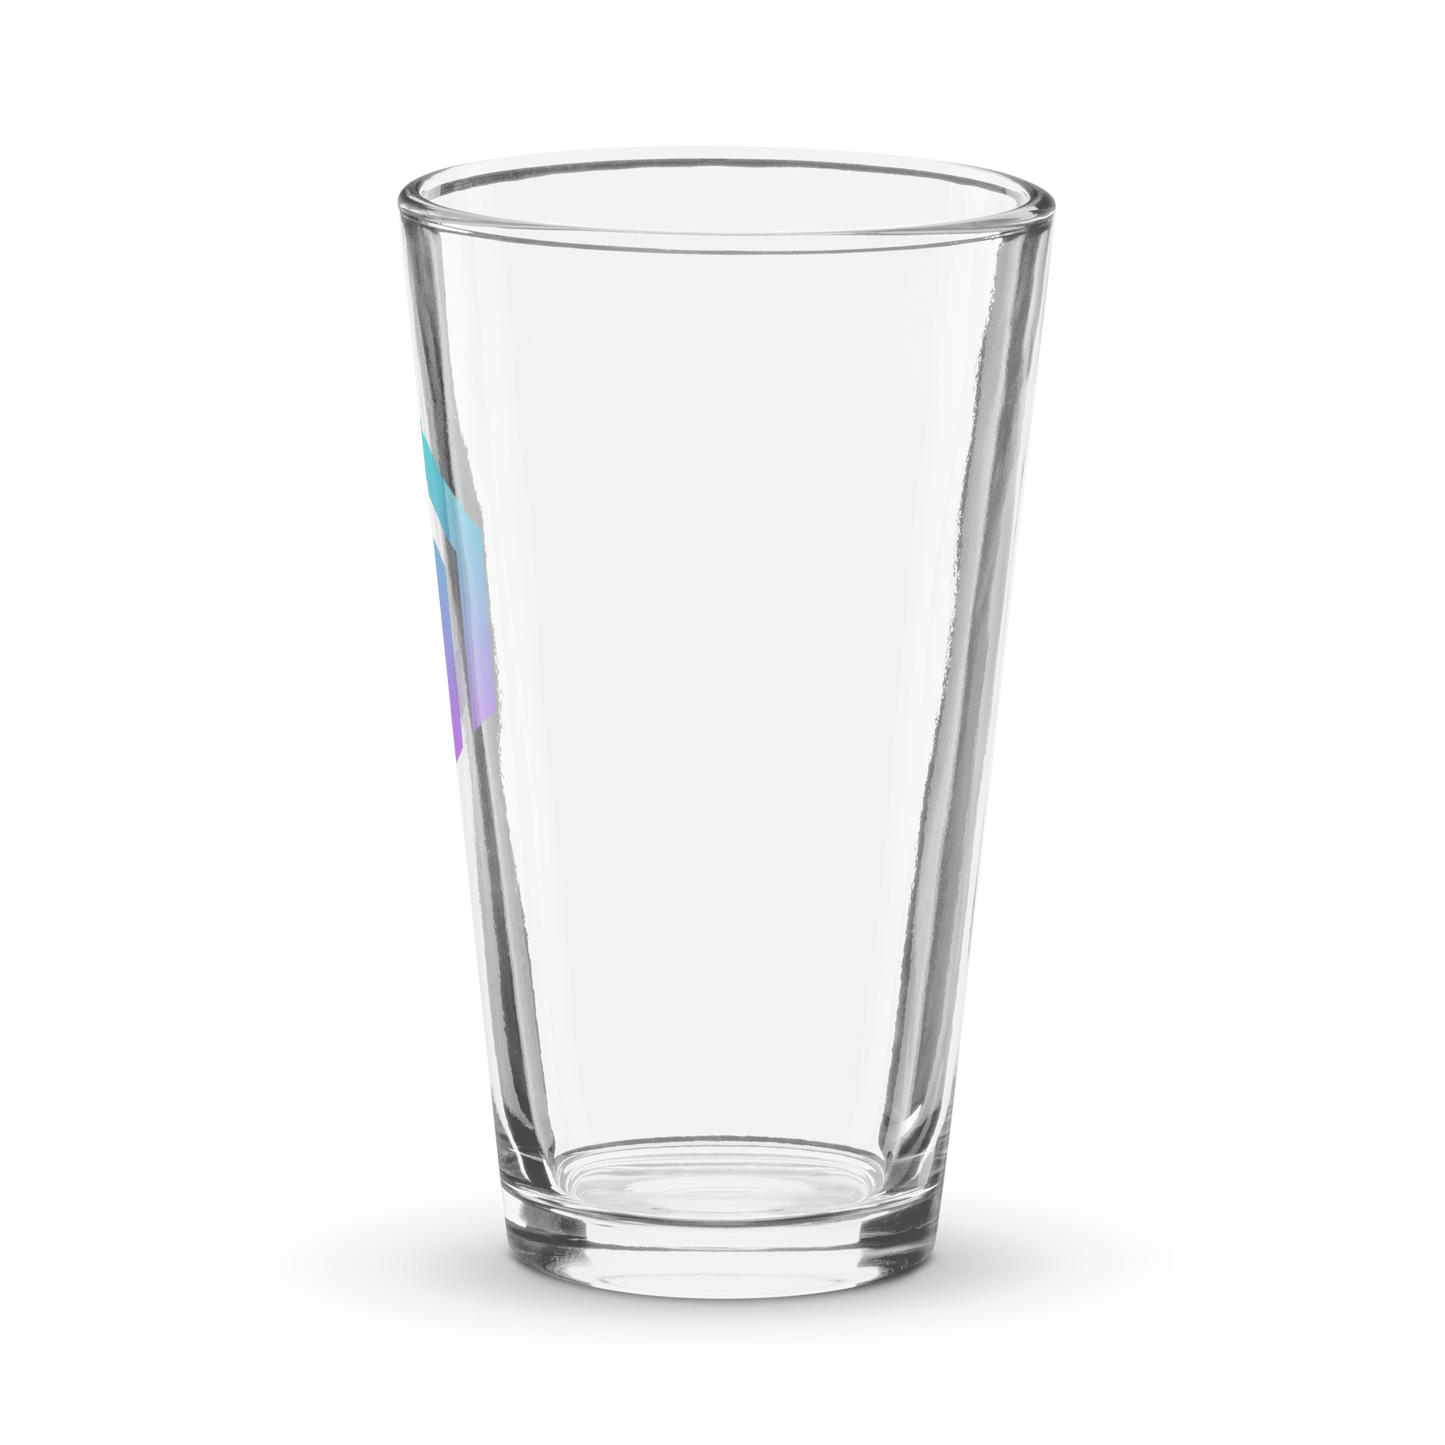 MetaLabz Pint Glass